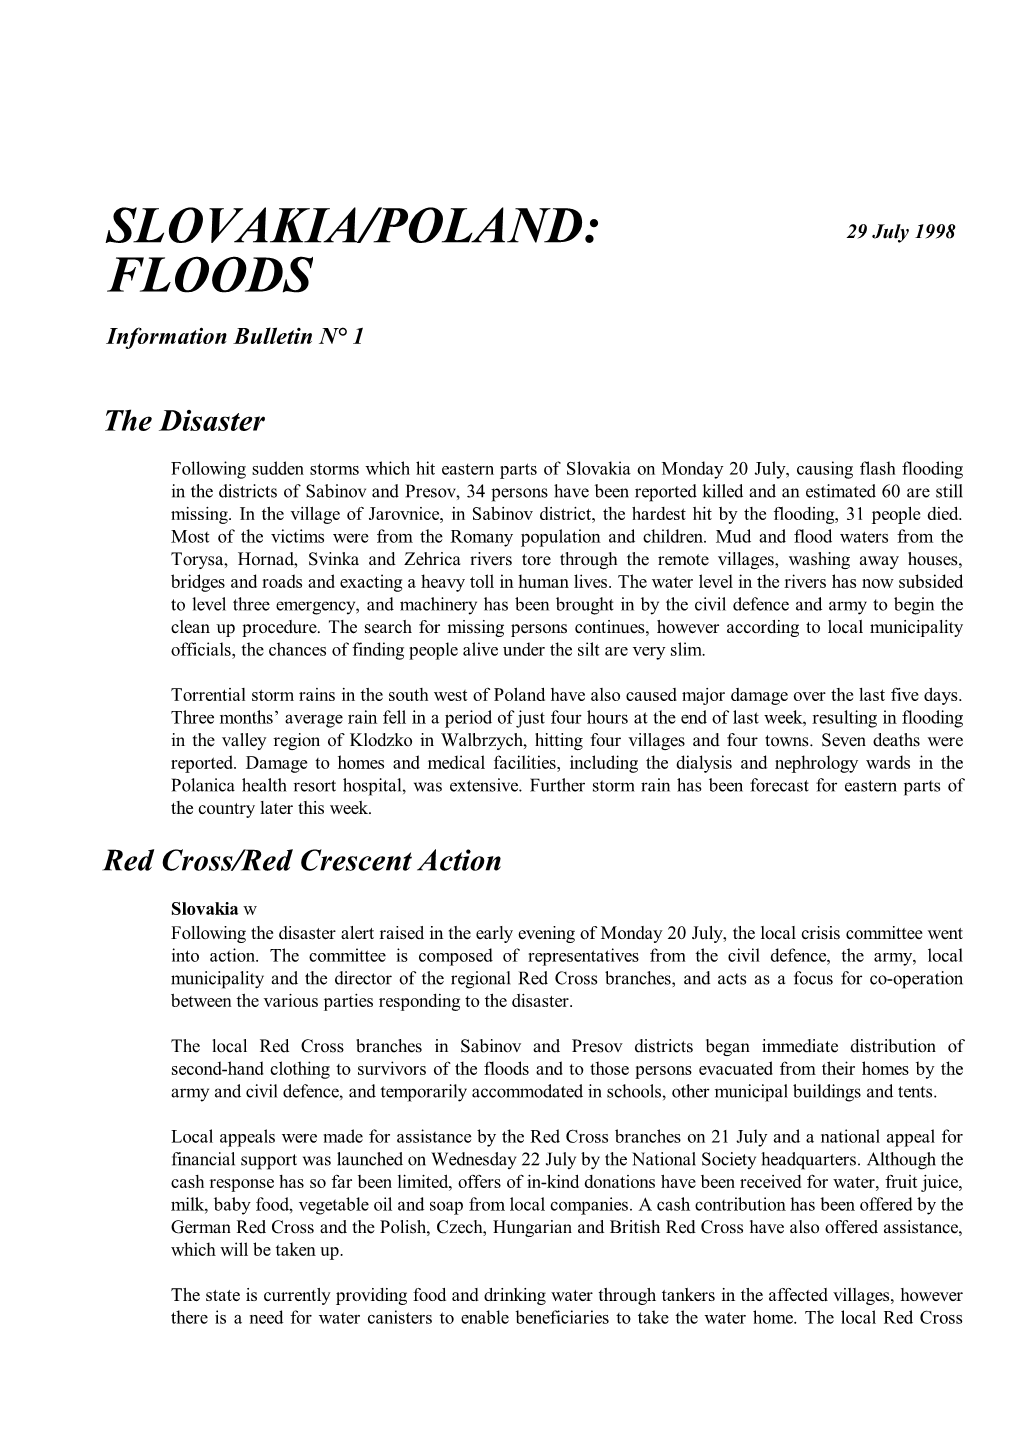 FLOODS Information Bulletin N° 1